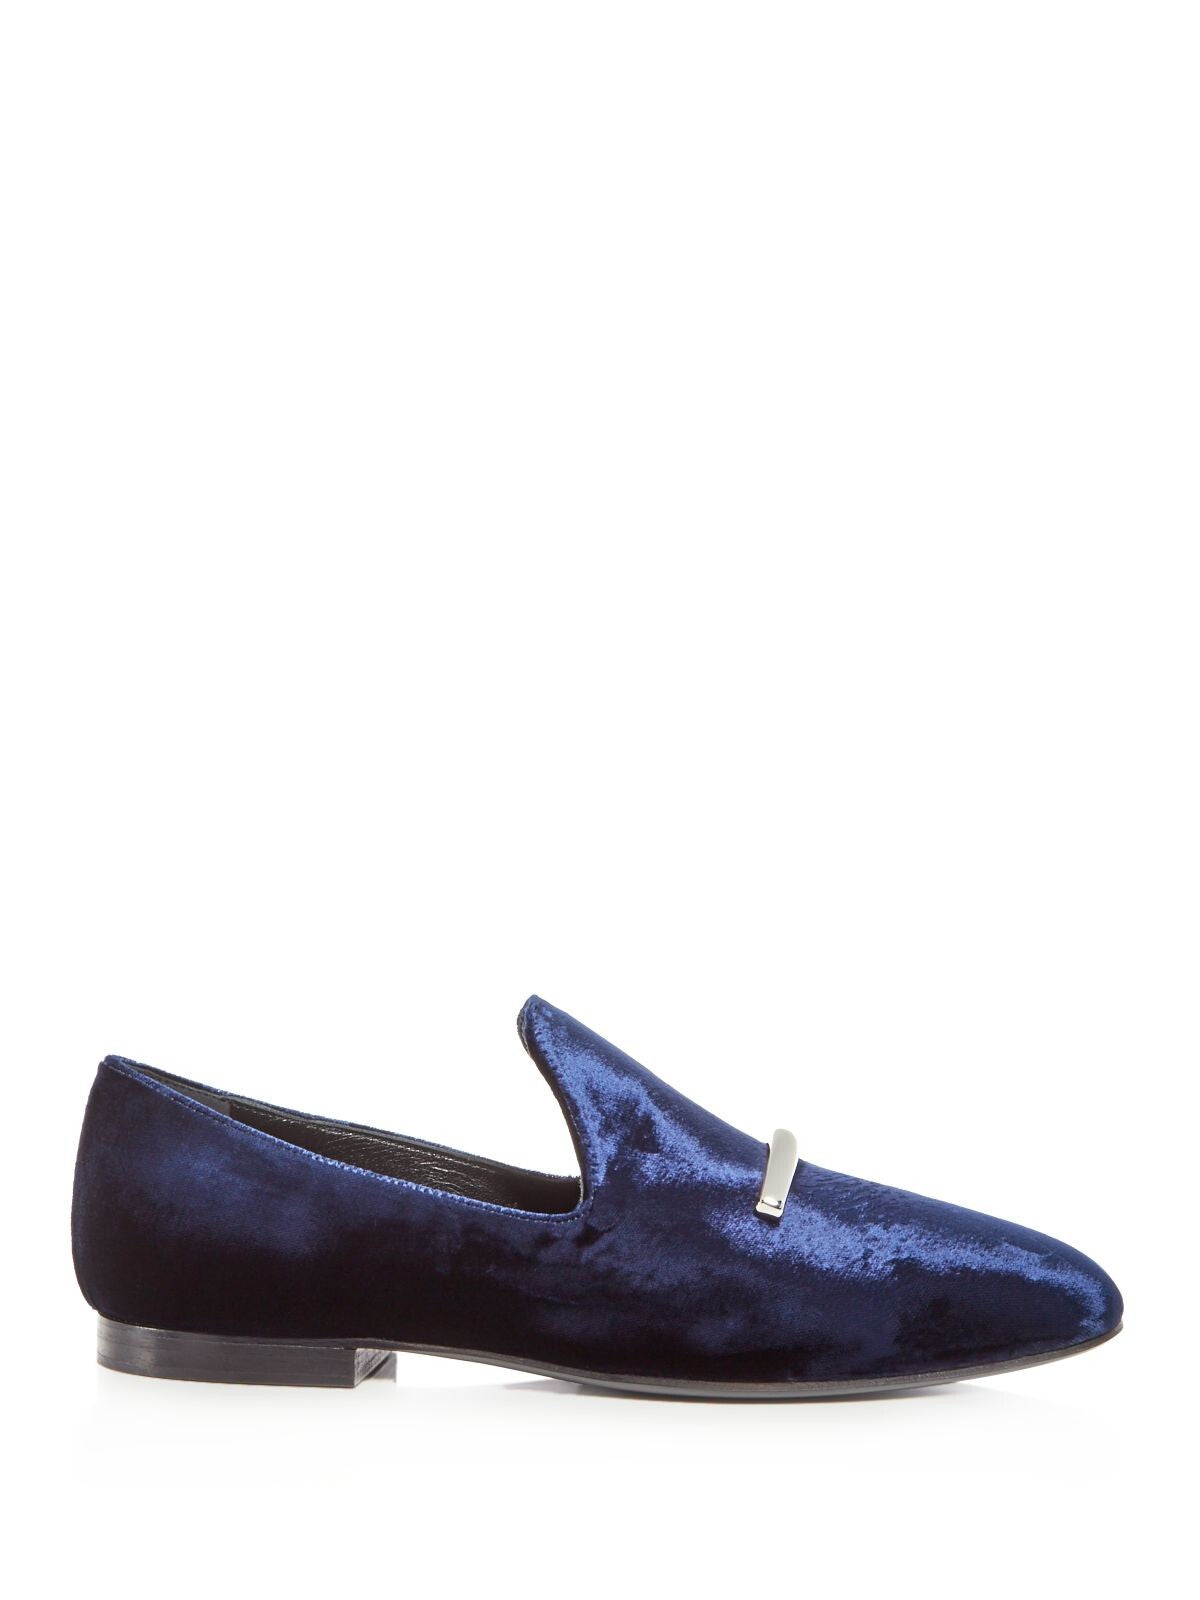 VIA SPIGA Womens Blue Padded Metallic Tallis Square Toe Slip On Dress Loafers Shoes M